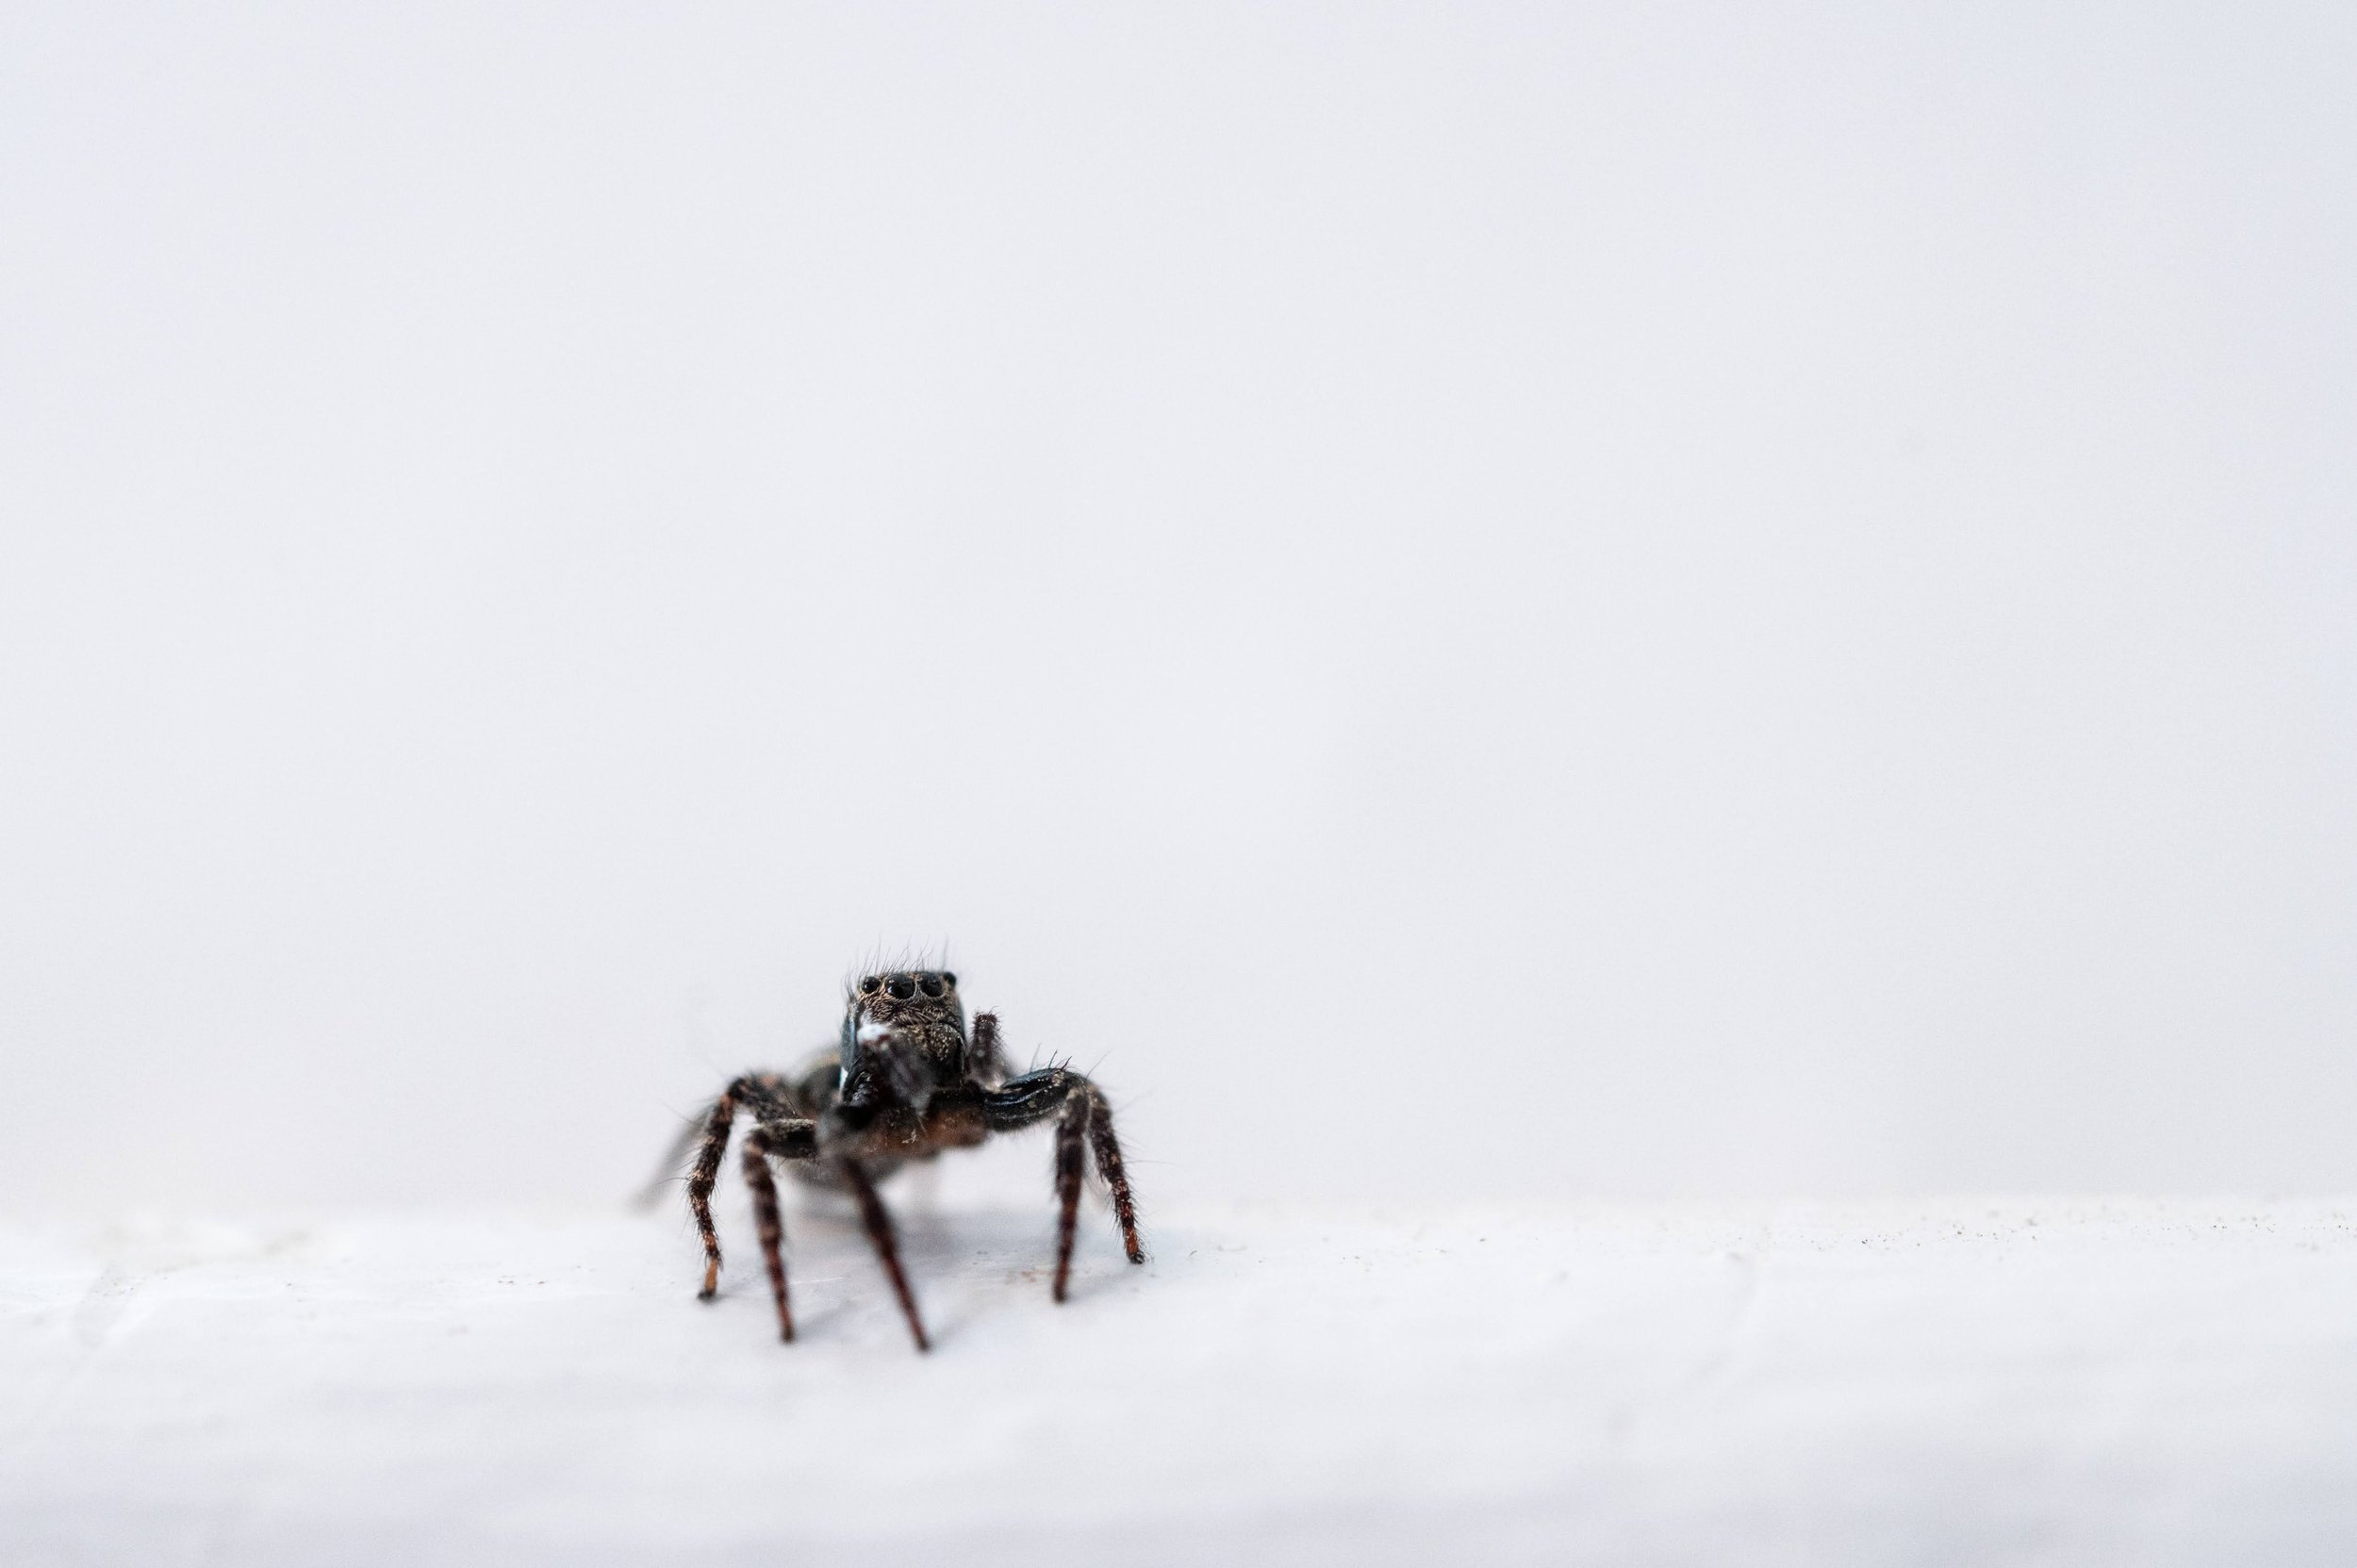  A macro image of a jumping spider on a windowsill. Birmingham, AL. 2020. 